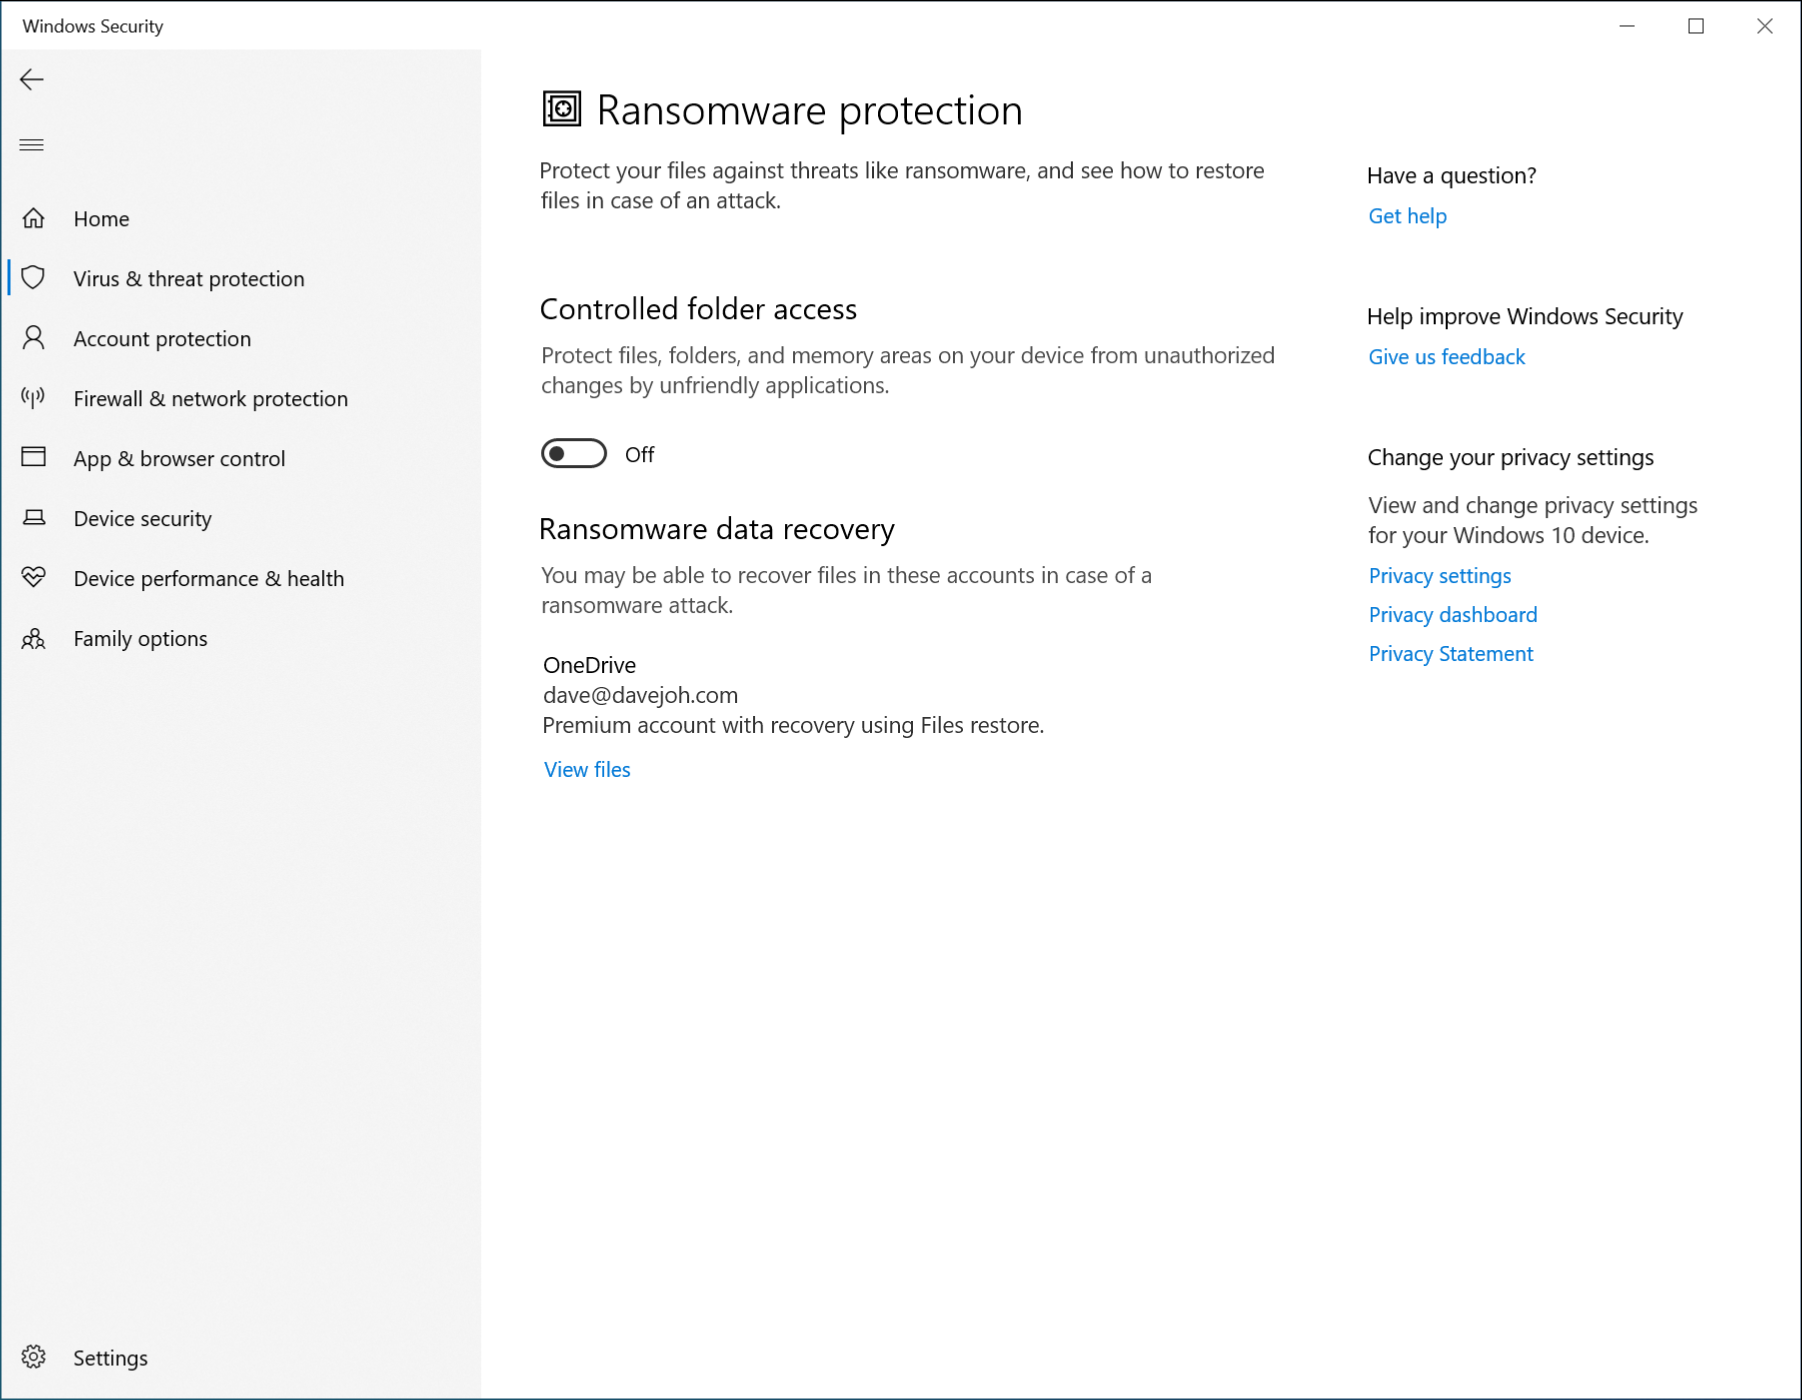 The ransomeware settings in Windows Defender